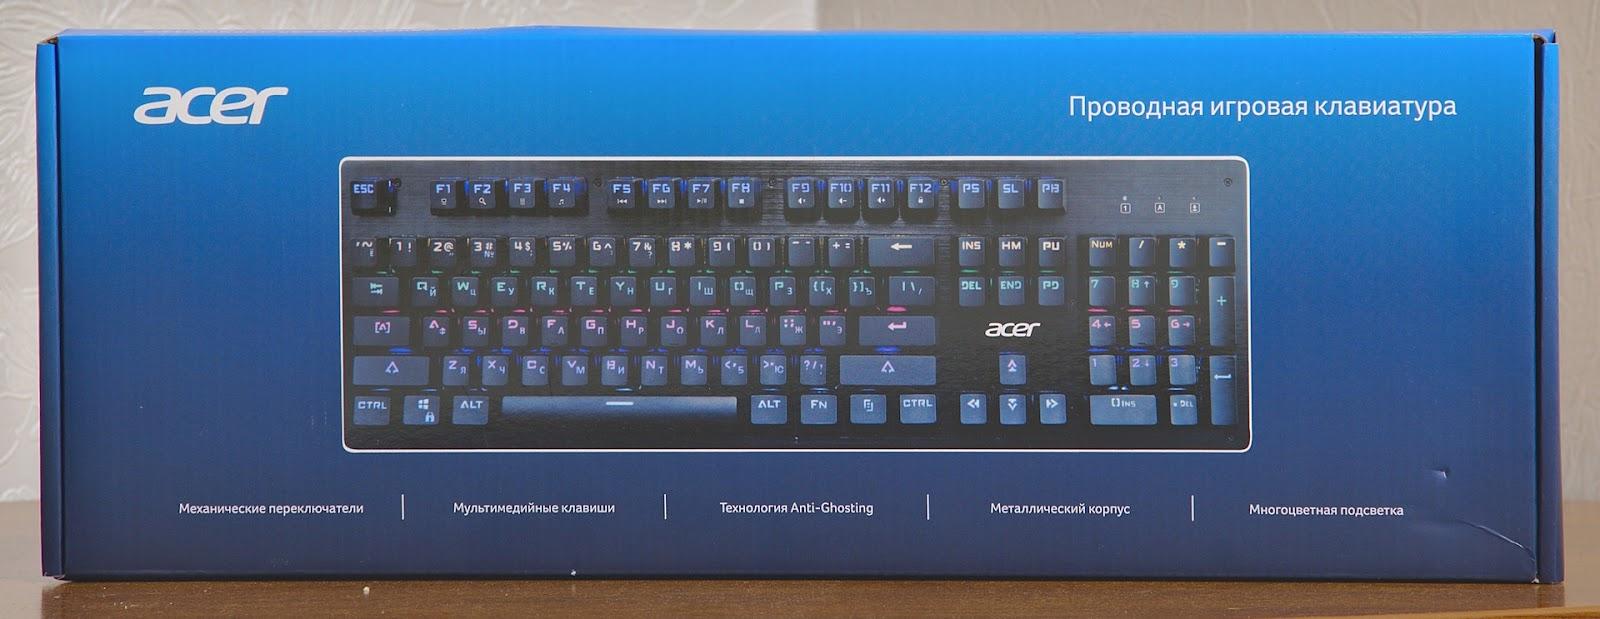 obzor klaviaturi Acer OKW127 (2).jpg